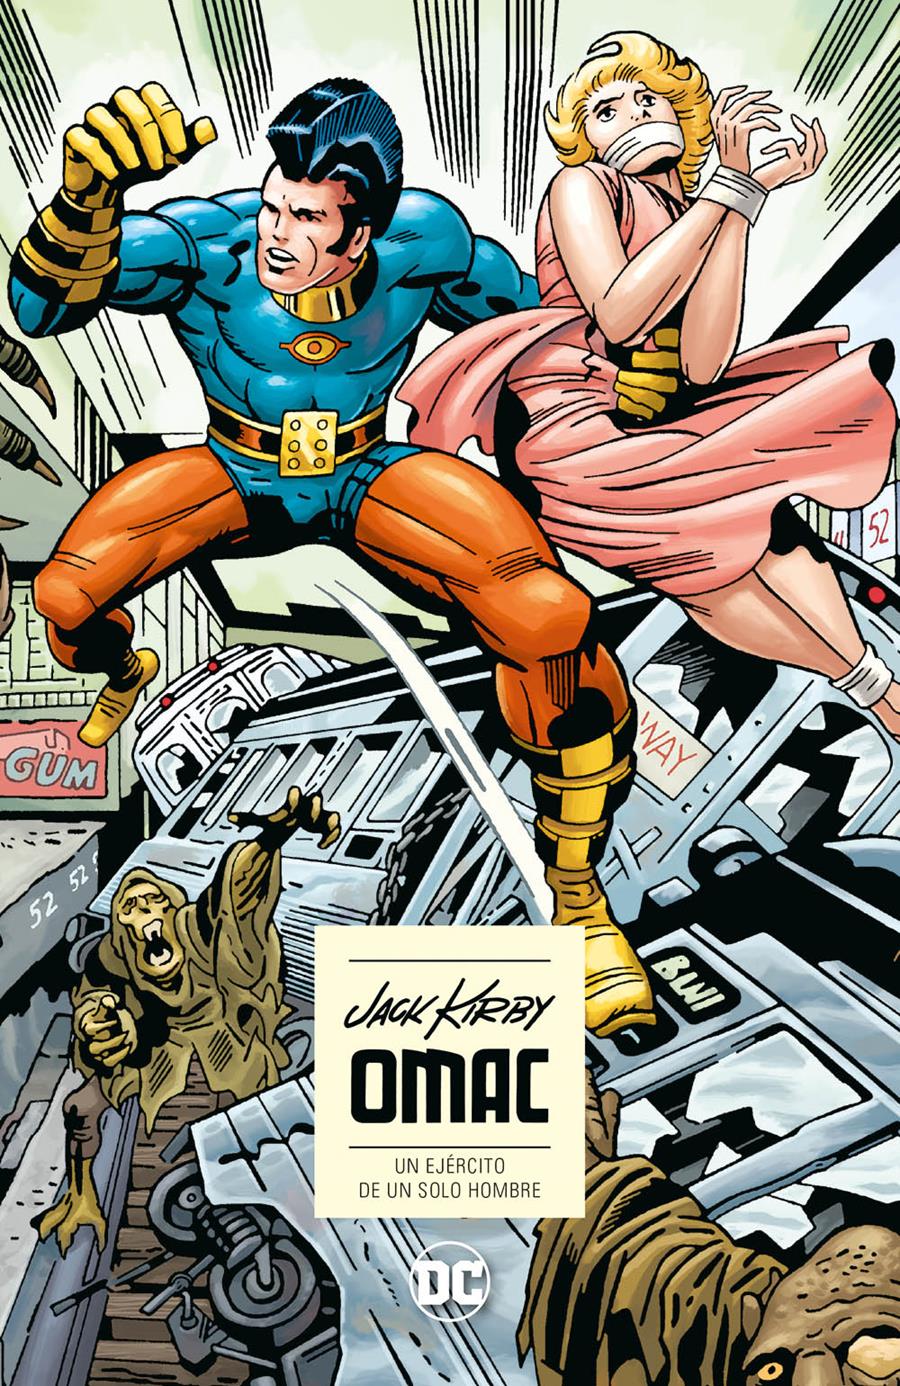 O.M.A.C. de Jack Kirby (DC Icons) | N0821-ECC23 | Roge Antonio / Tom Taylor | Terra de Còmic - Tu tienda de cómics online especializada en cómics, manga y merchandising